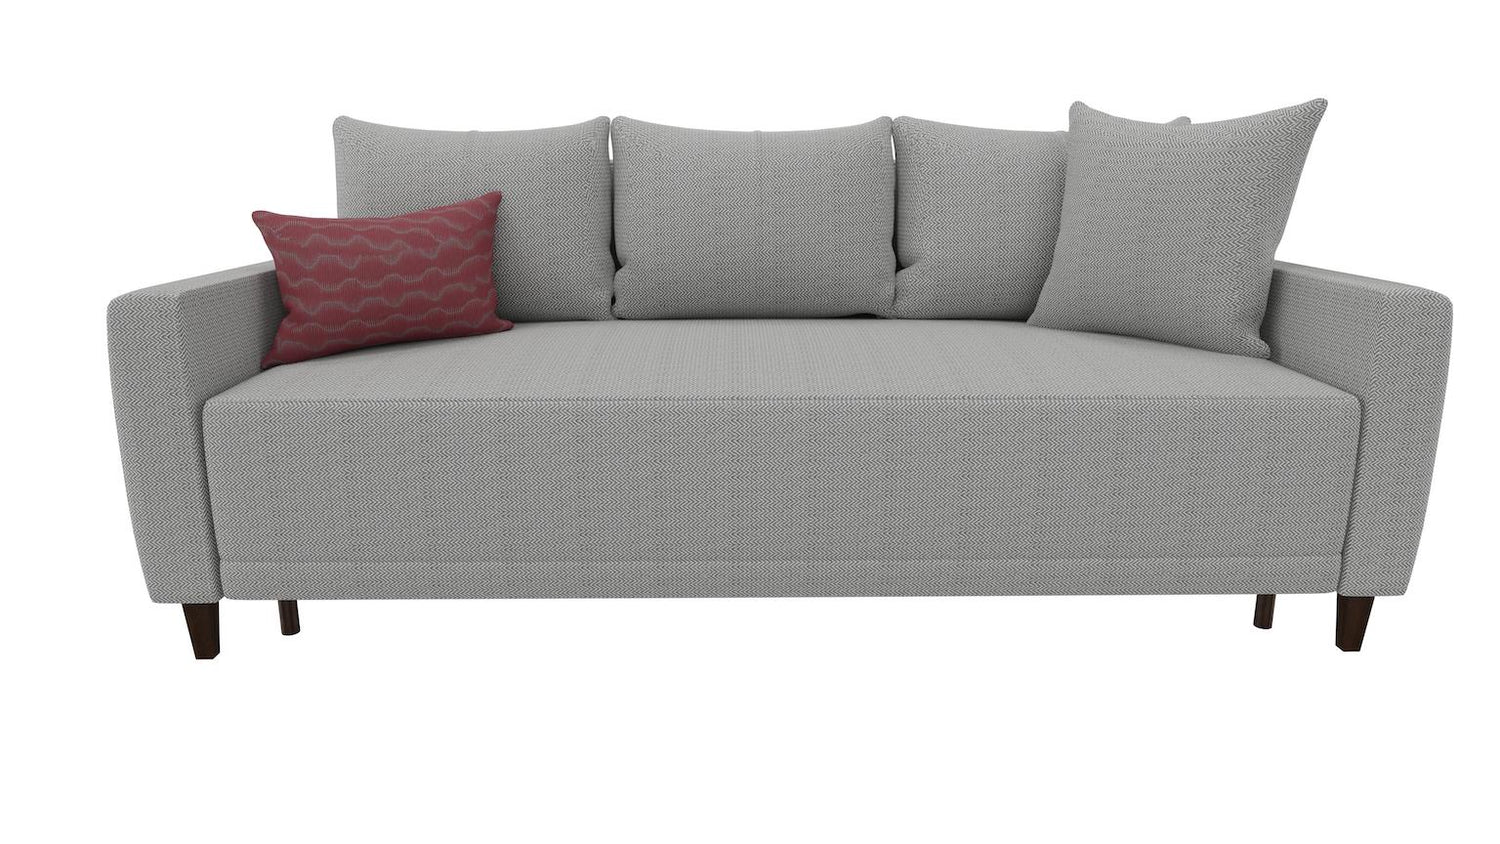 Smart Bolzoni Dark Gray 3-Seater Sofa Bed with Storage - SMART 03.302 .0582.2832.0101.0000.17.4